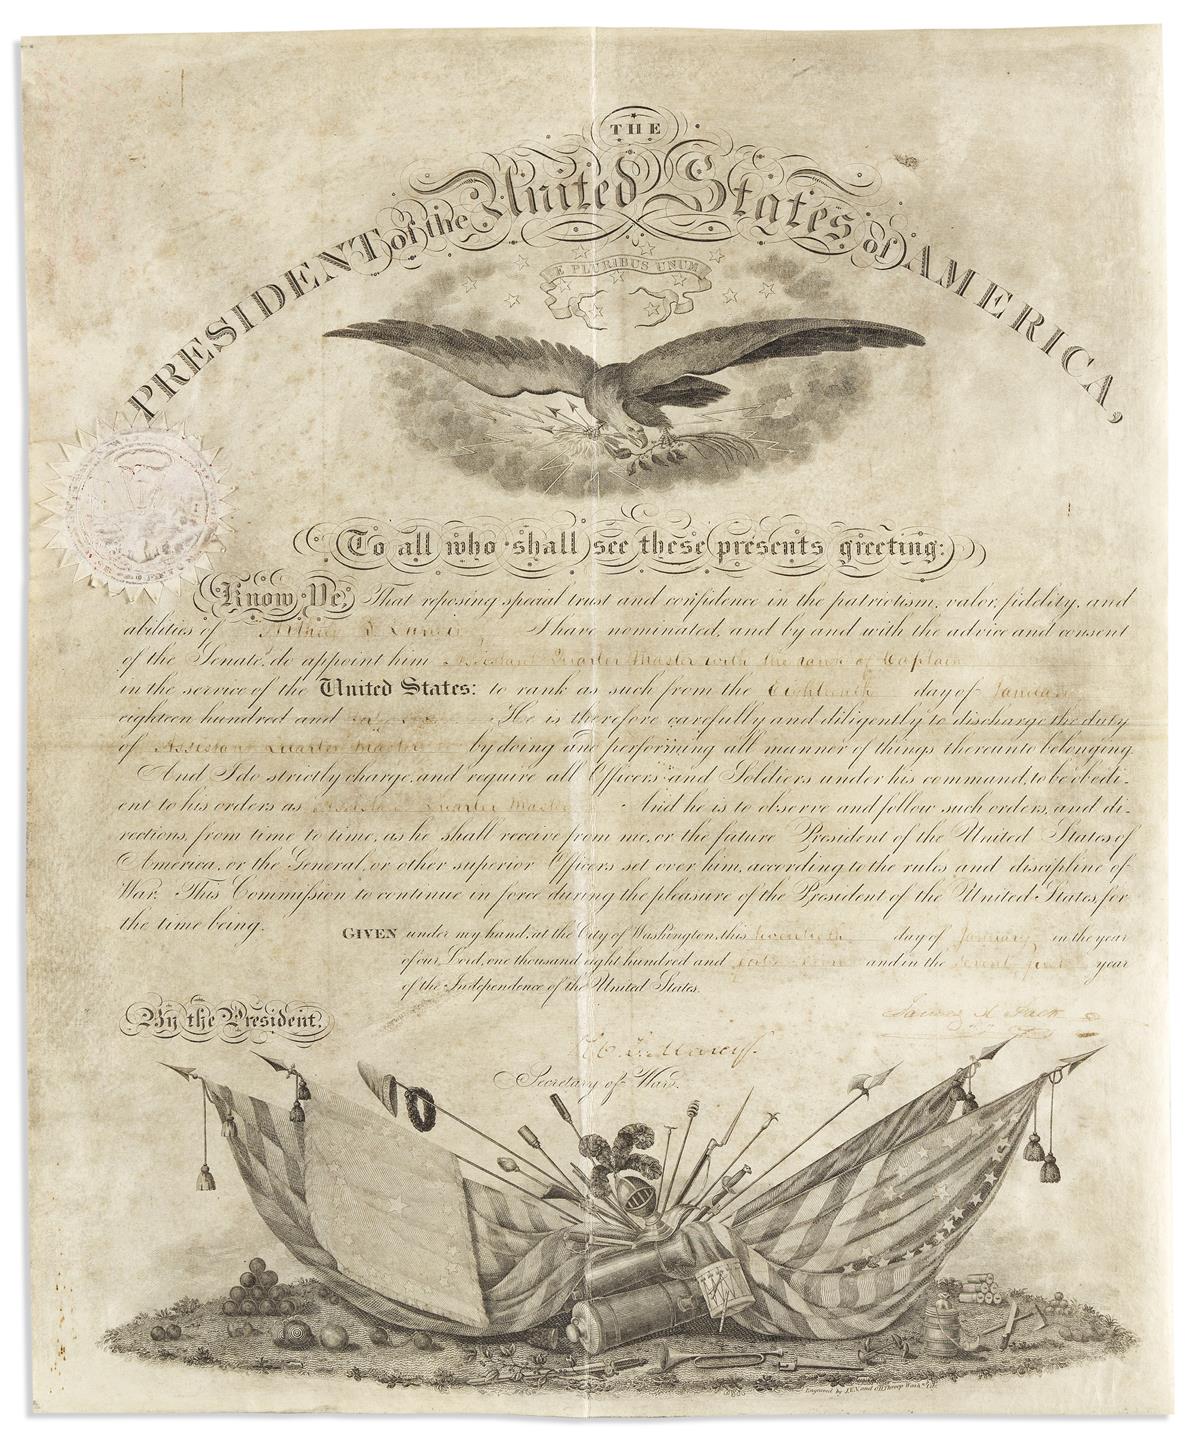 POLK, JAMES K. Partly-printed vellum Document Signed, as President,